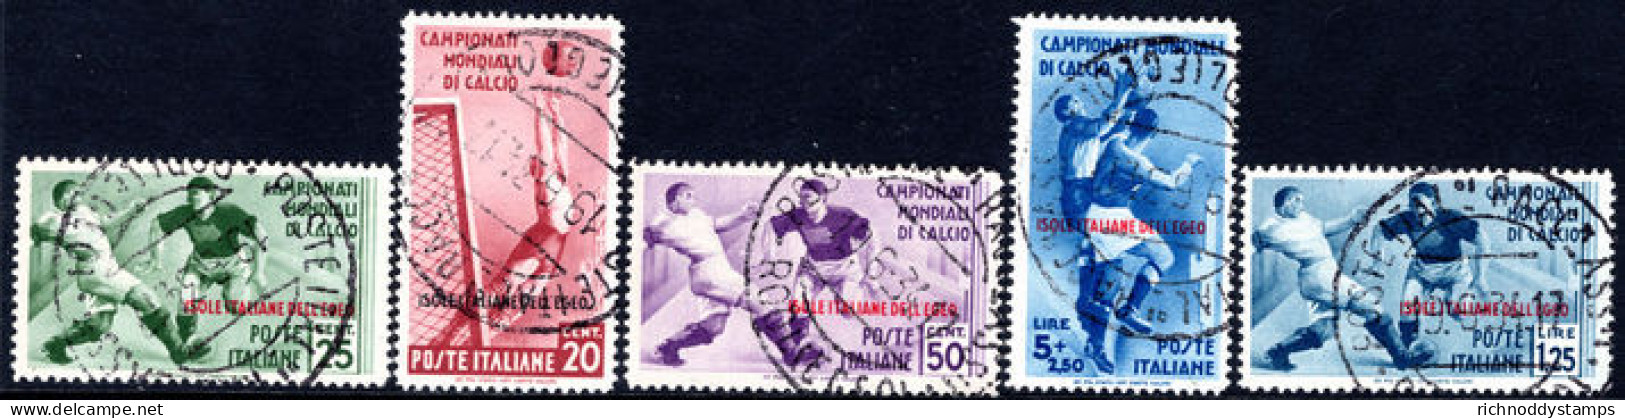 Dodecanese Islands 1934 Football Regular Set Fine Used. - Egée